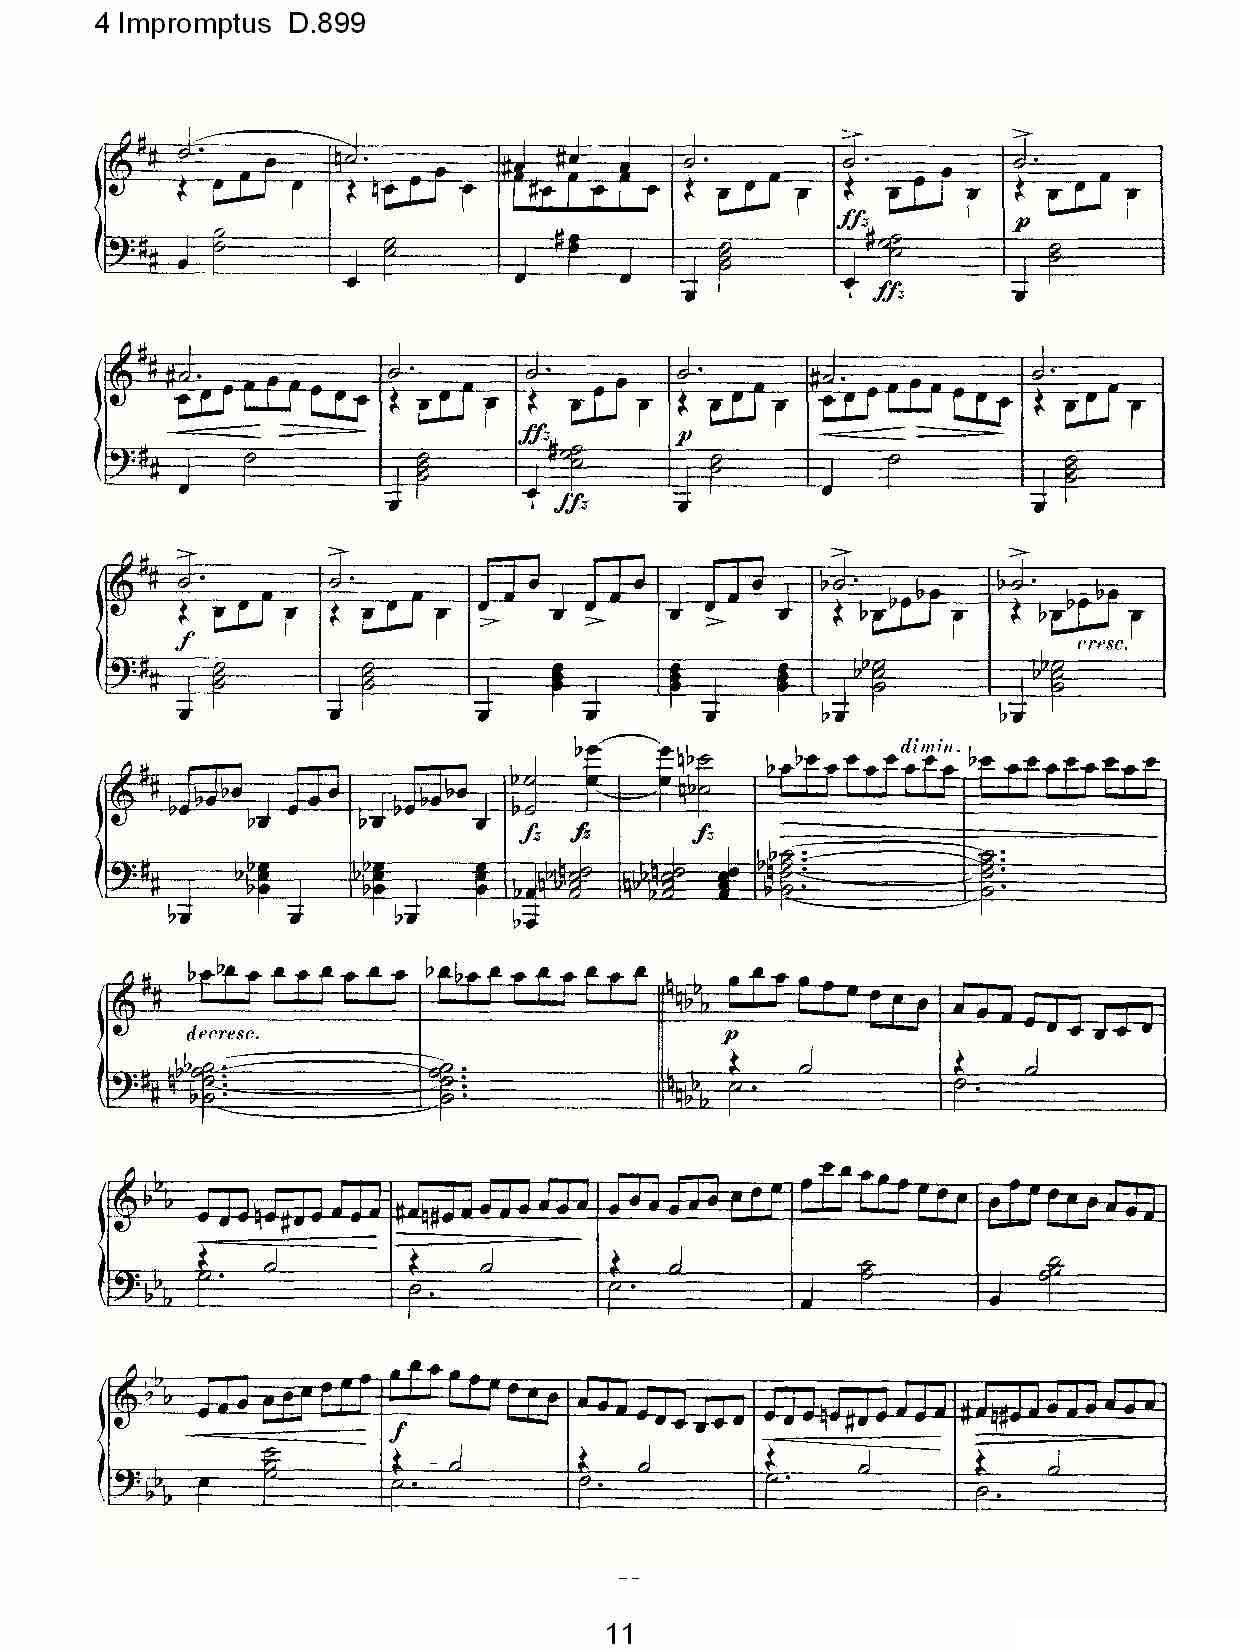 4 Impromptus D.899（4人即兴演奏 D.899）钢琴曲谱（图11）